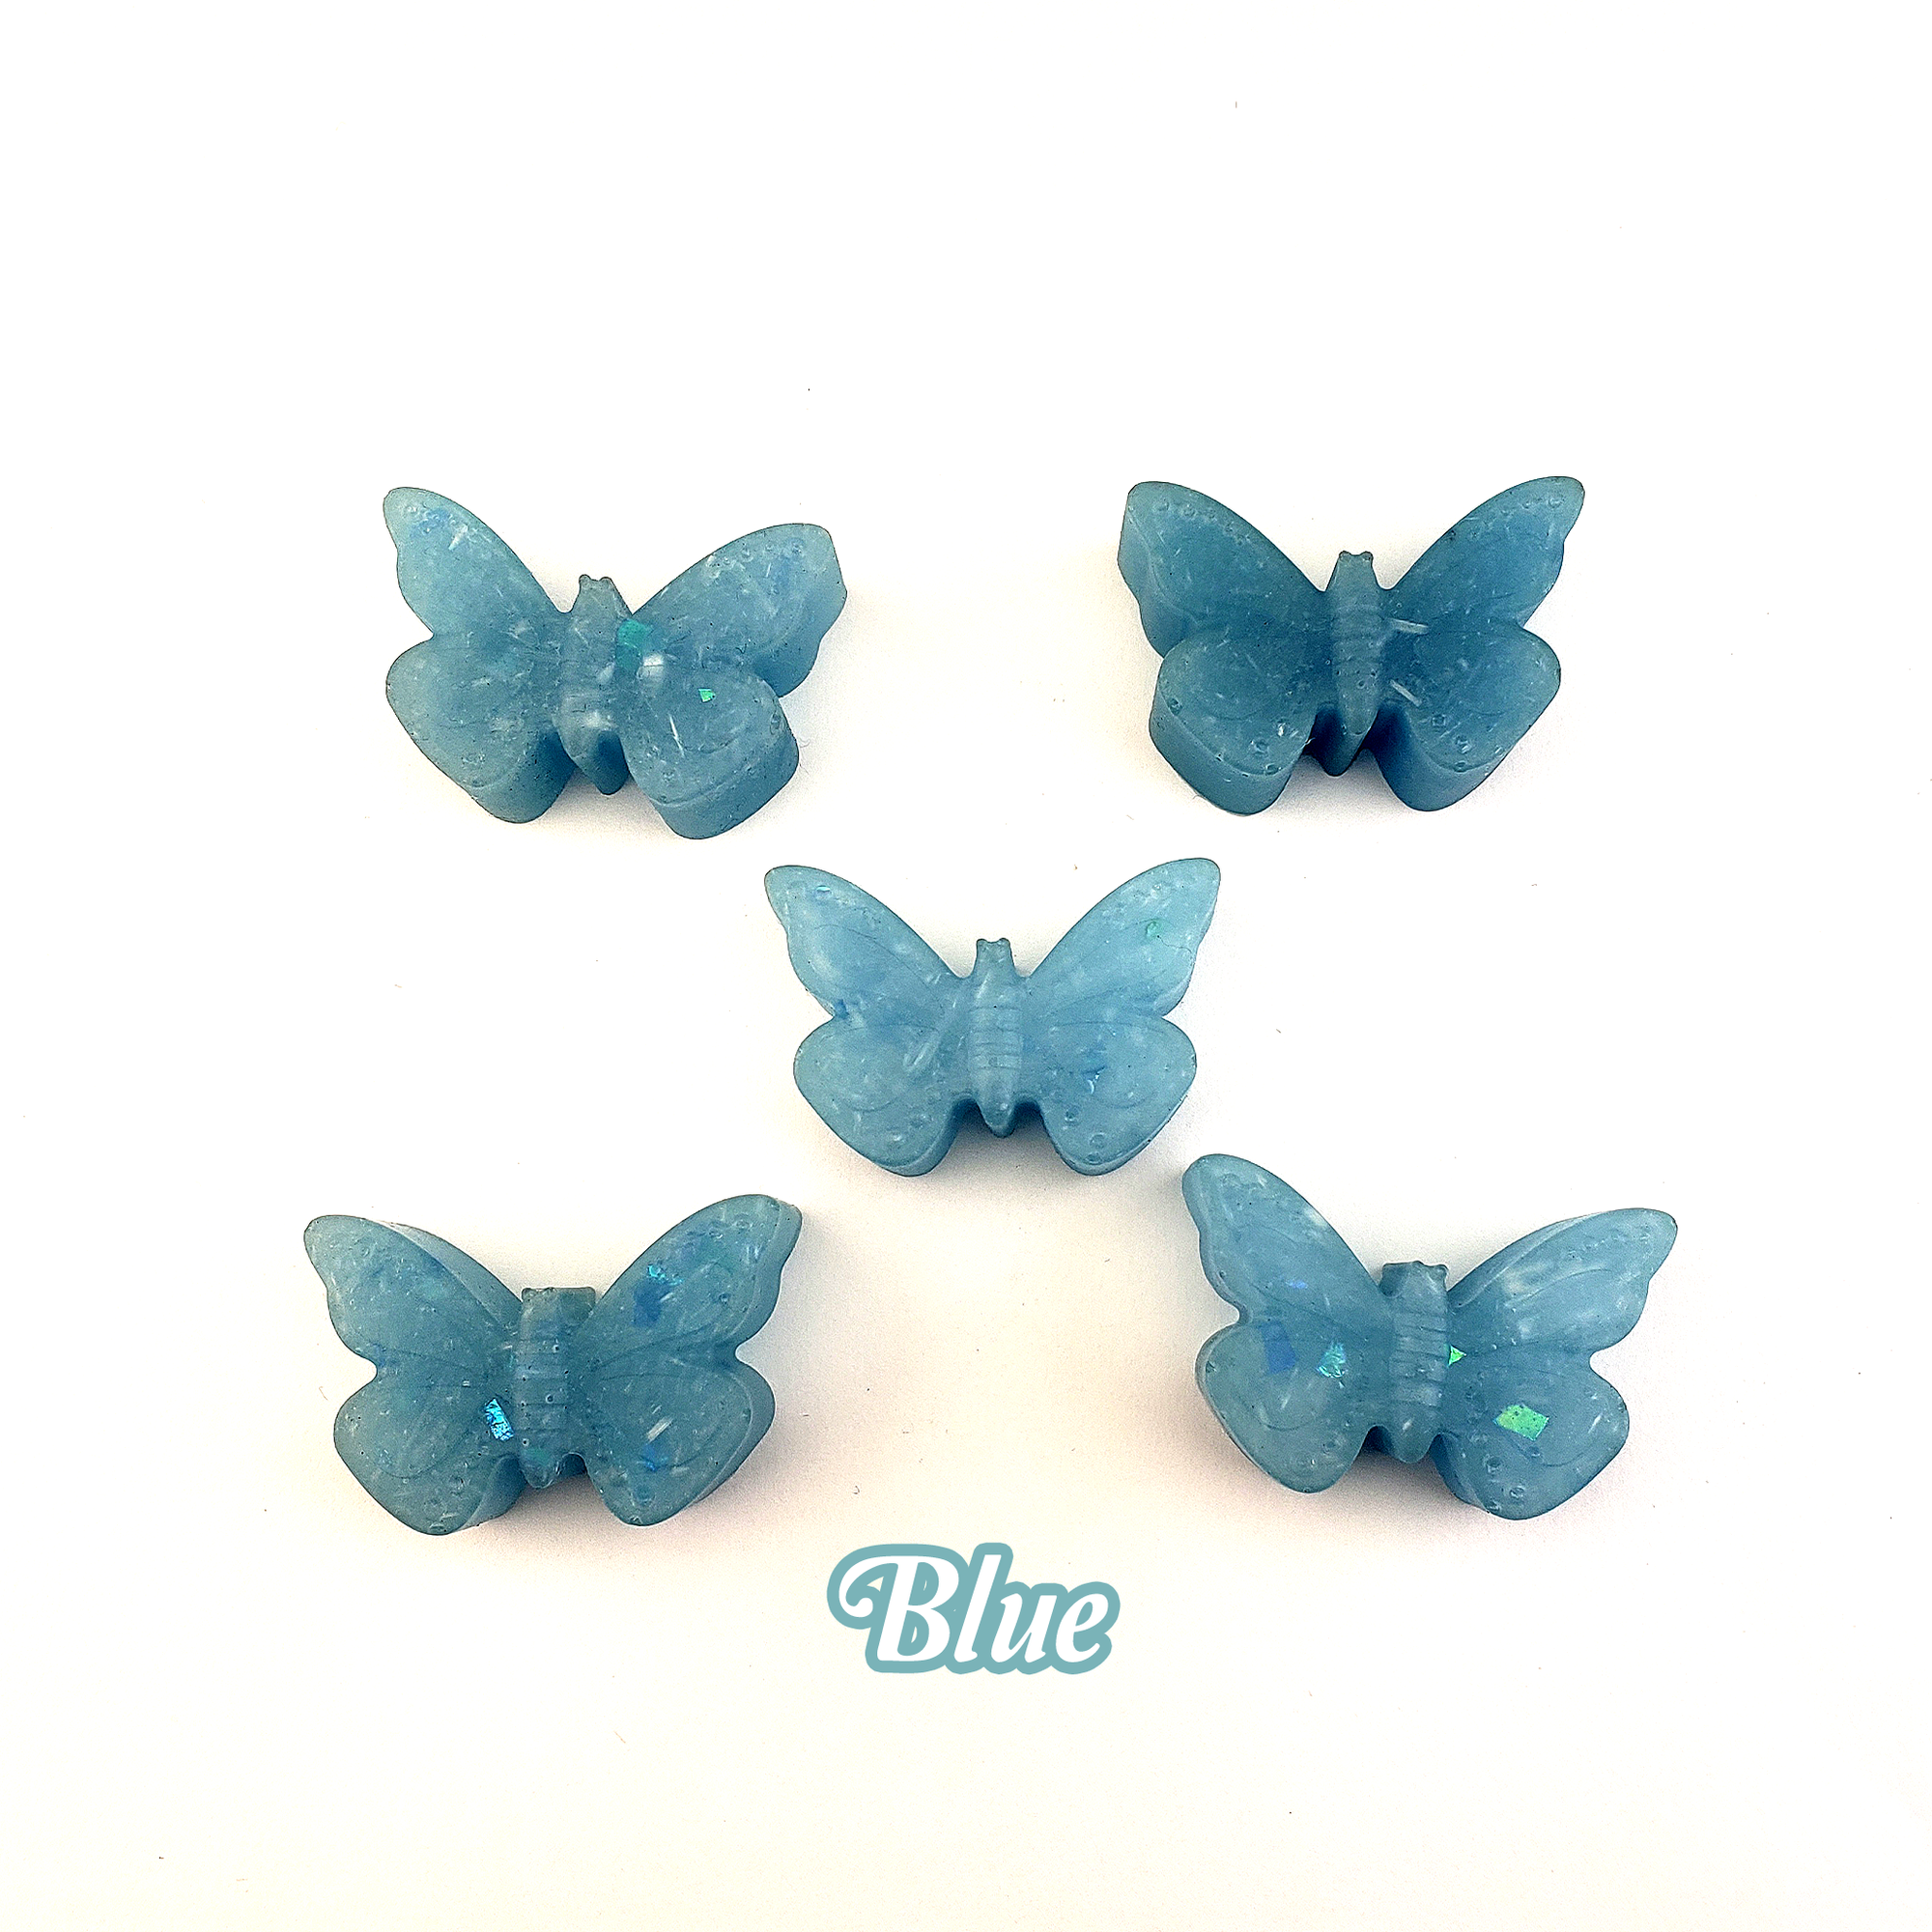  Rainbow Resin Butterfly Totem Figurine - Handmade Valentine's Day Gift - Blue